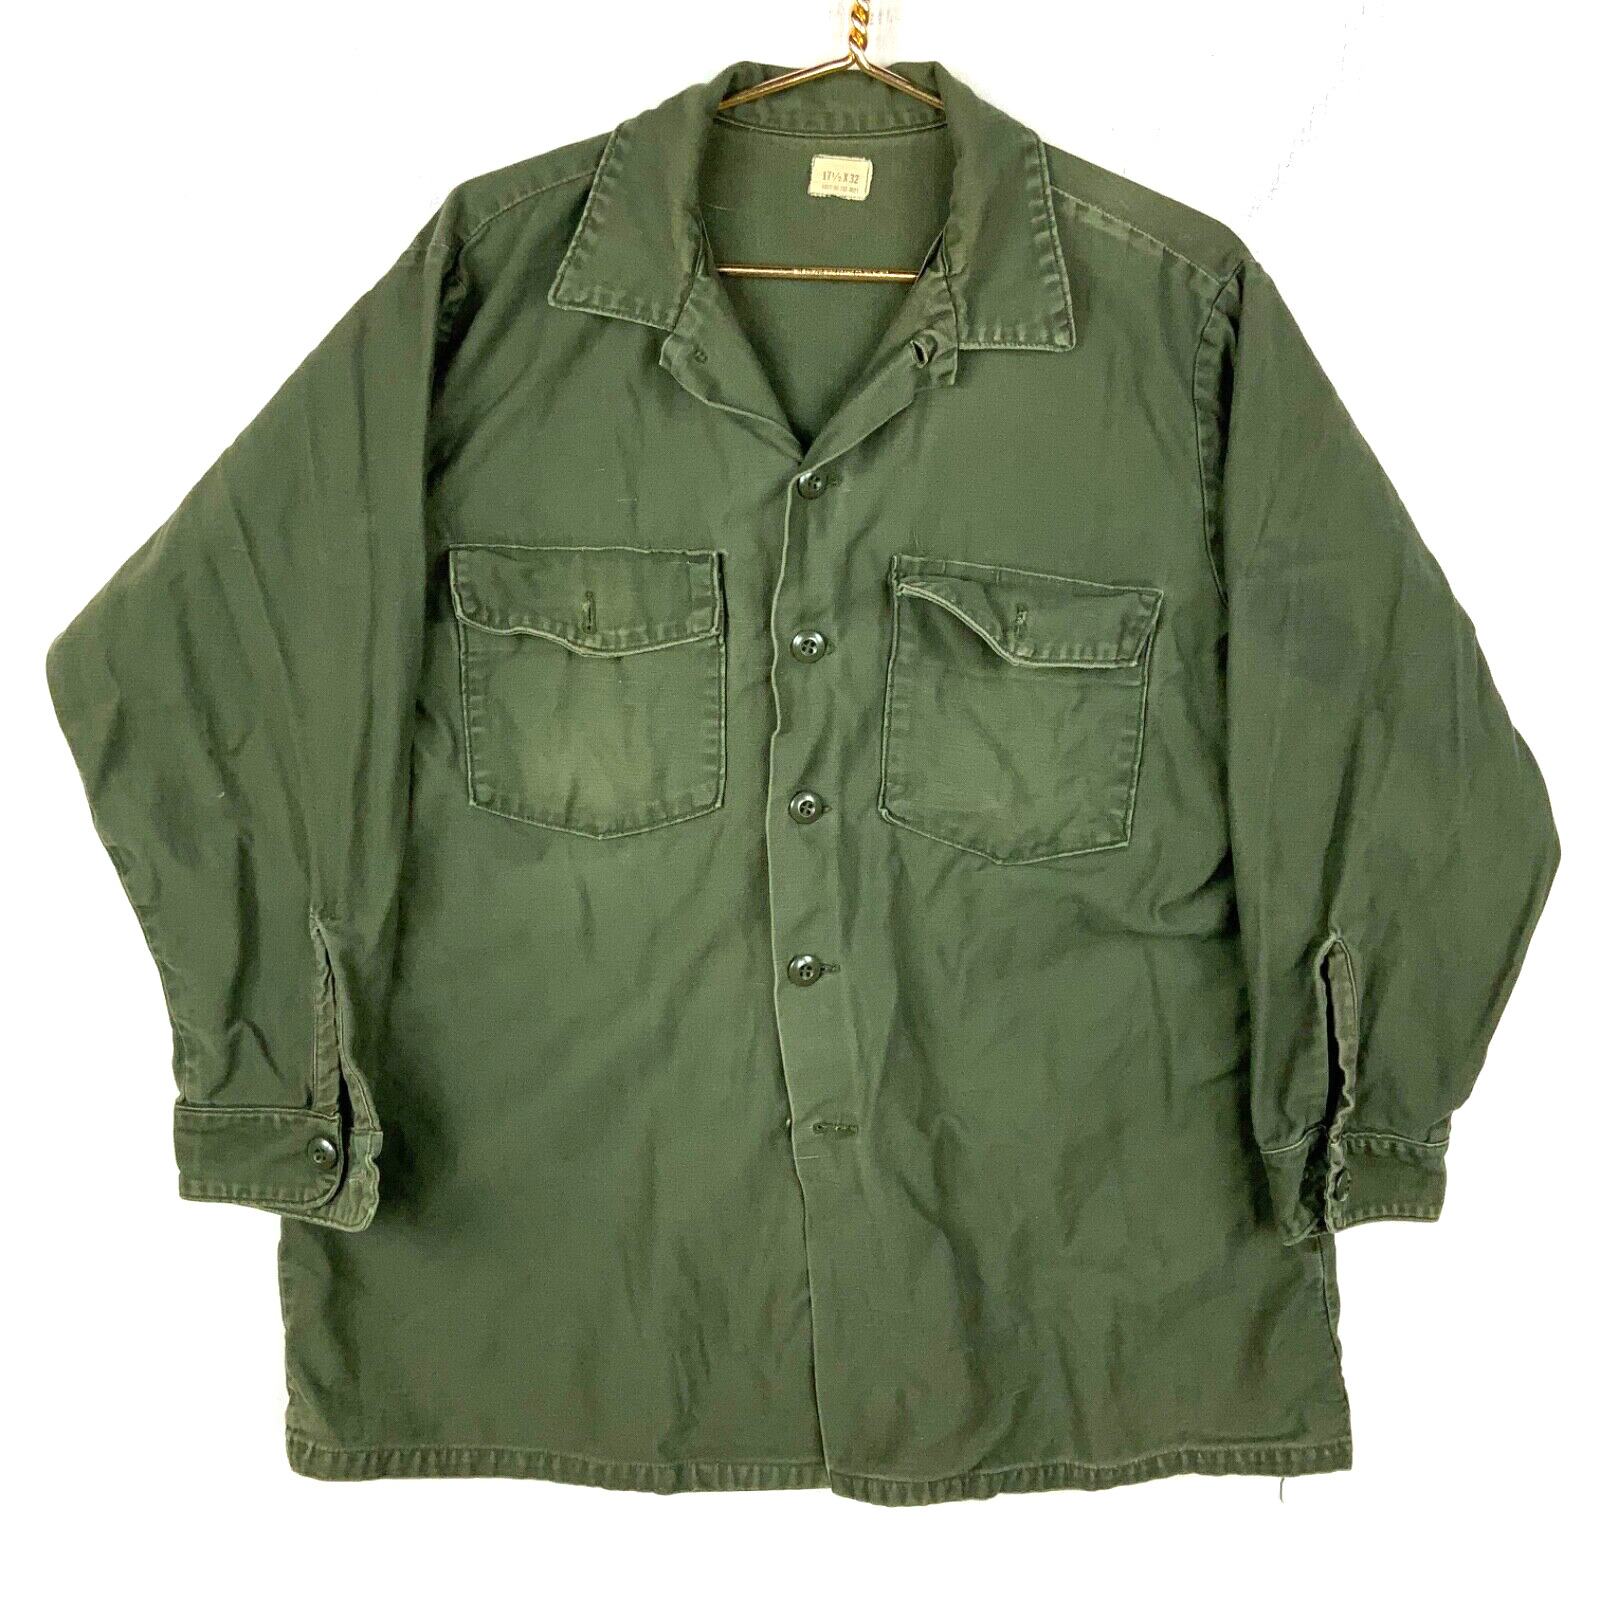 Vintage Us Army Og-107 Button Up Shirt Size 17.5x32 Green 1975 Vietnam Era 70s